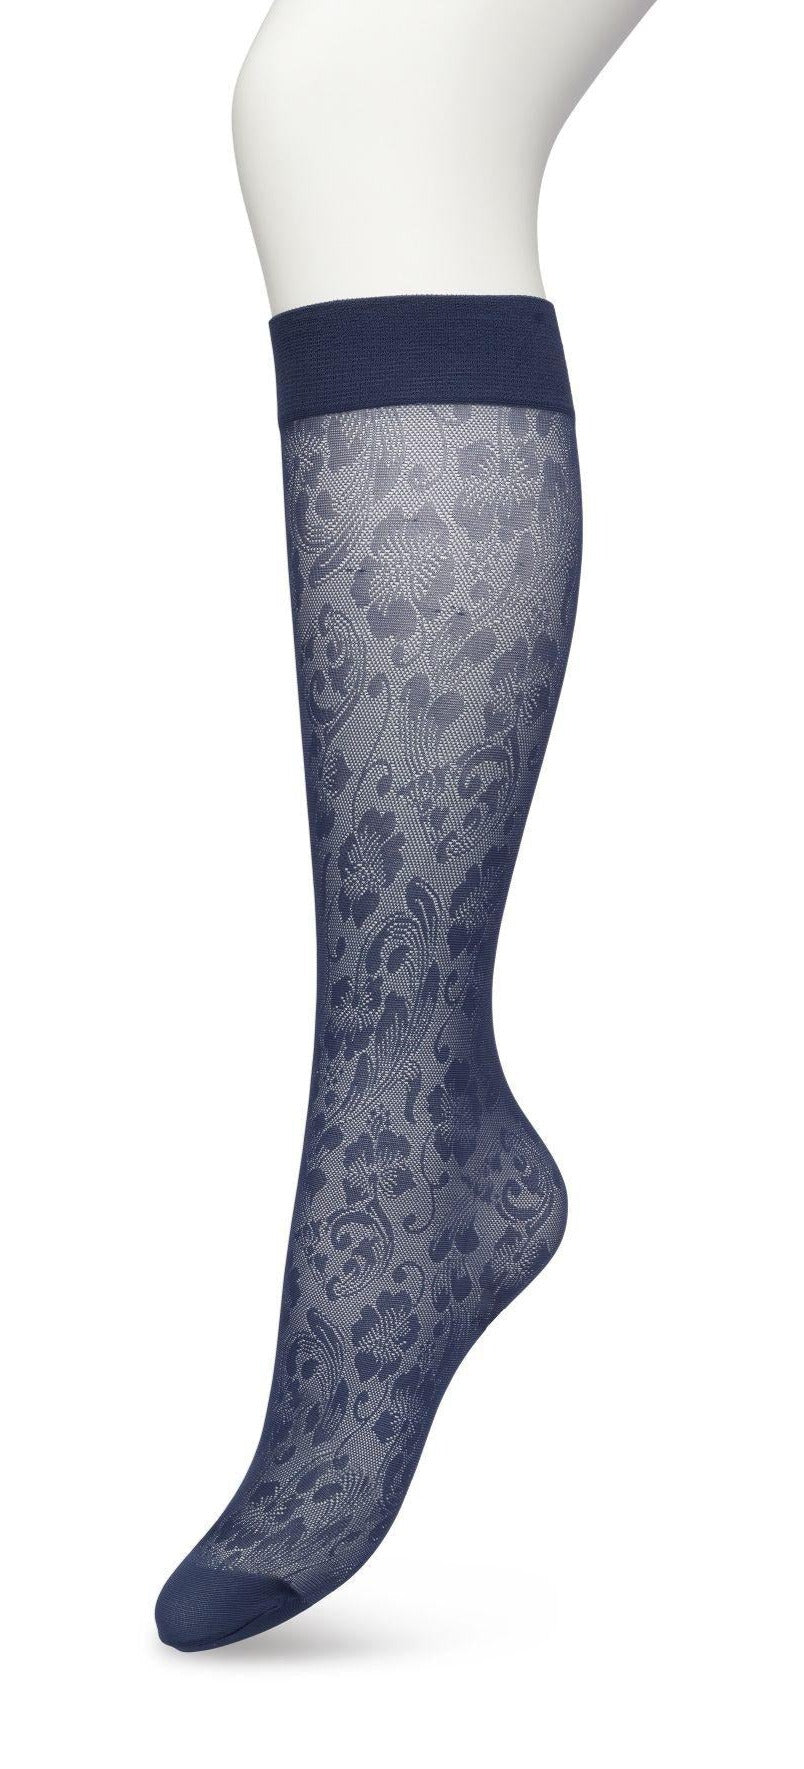 Bonnie Doon BP221803 Fancy Flowers Knee-Highs - Semi-sheer floral lace style patterned knee-high socks in navy blue.